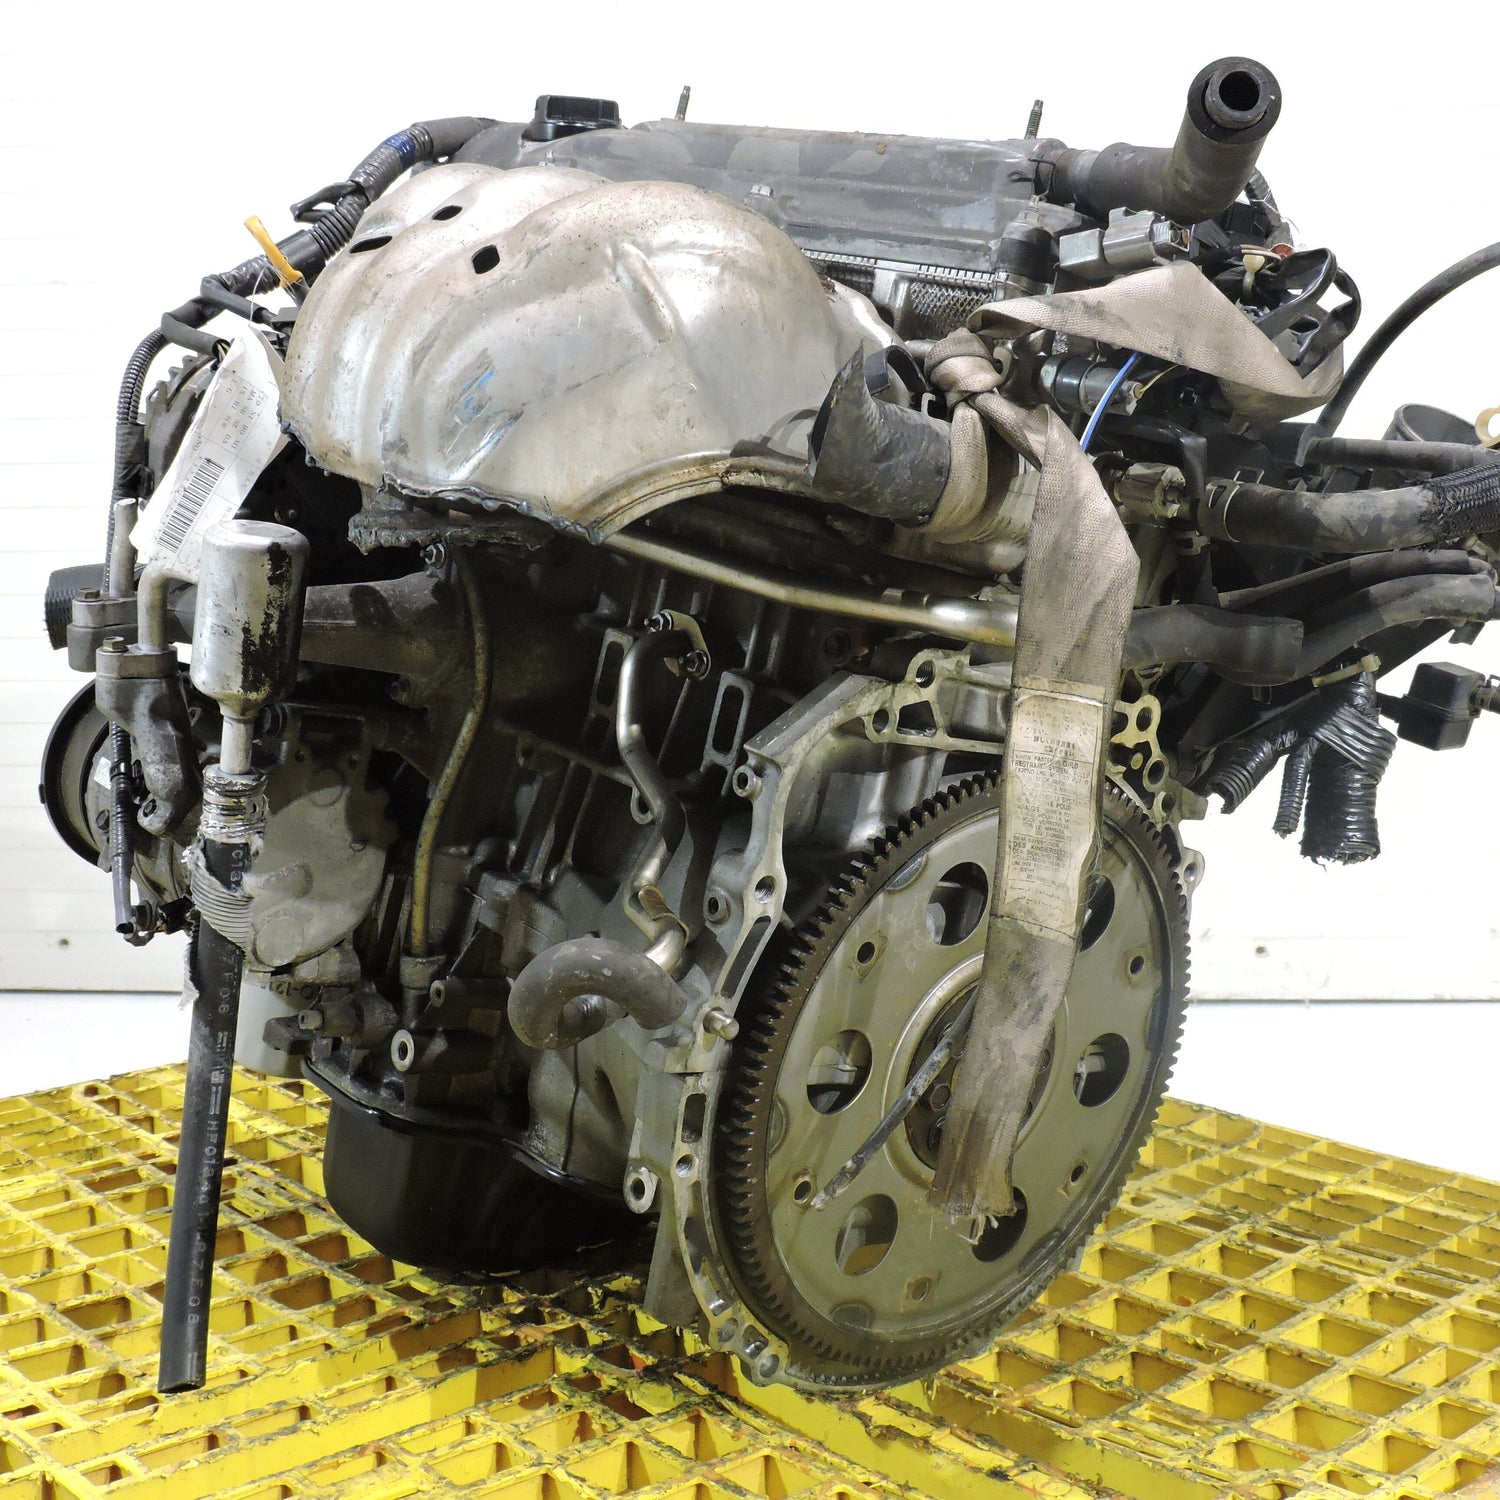 Toyota Camry 2002-2009 2.4L JDM Engine Motor - 2AZ-FE 4-Cylinder